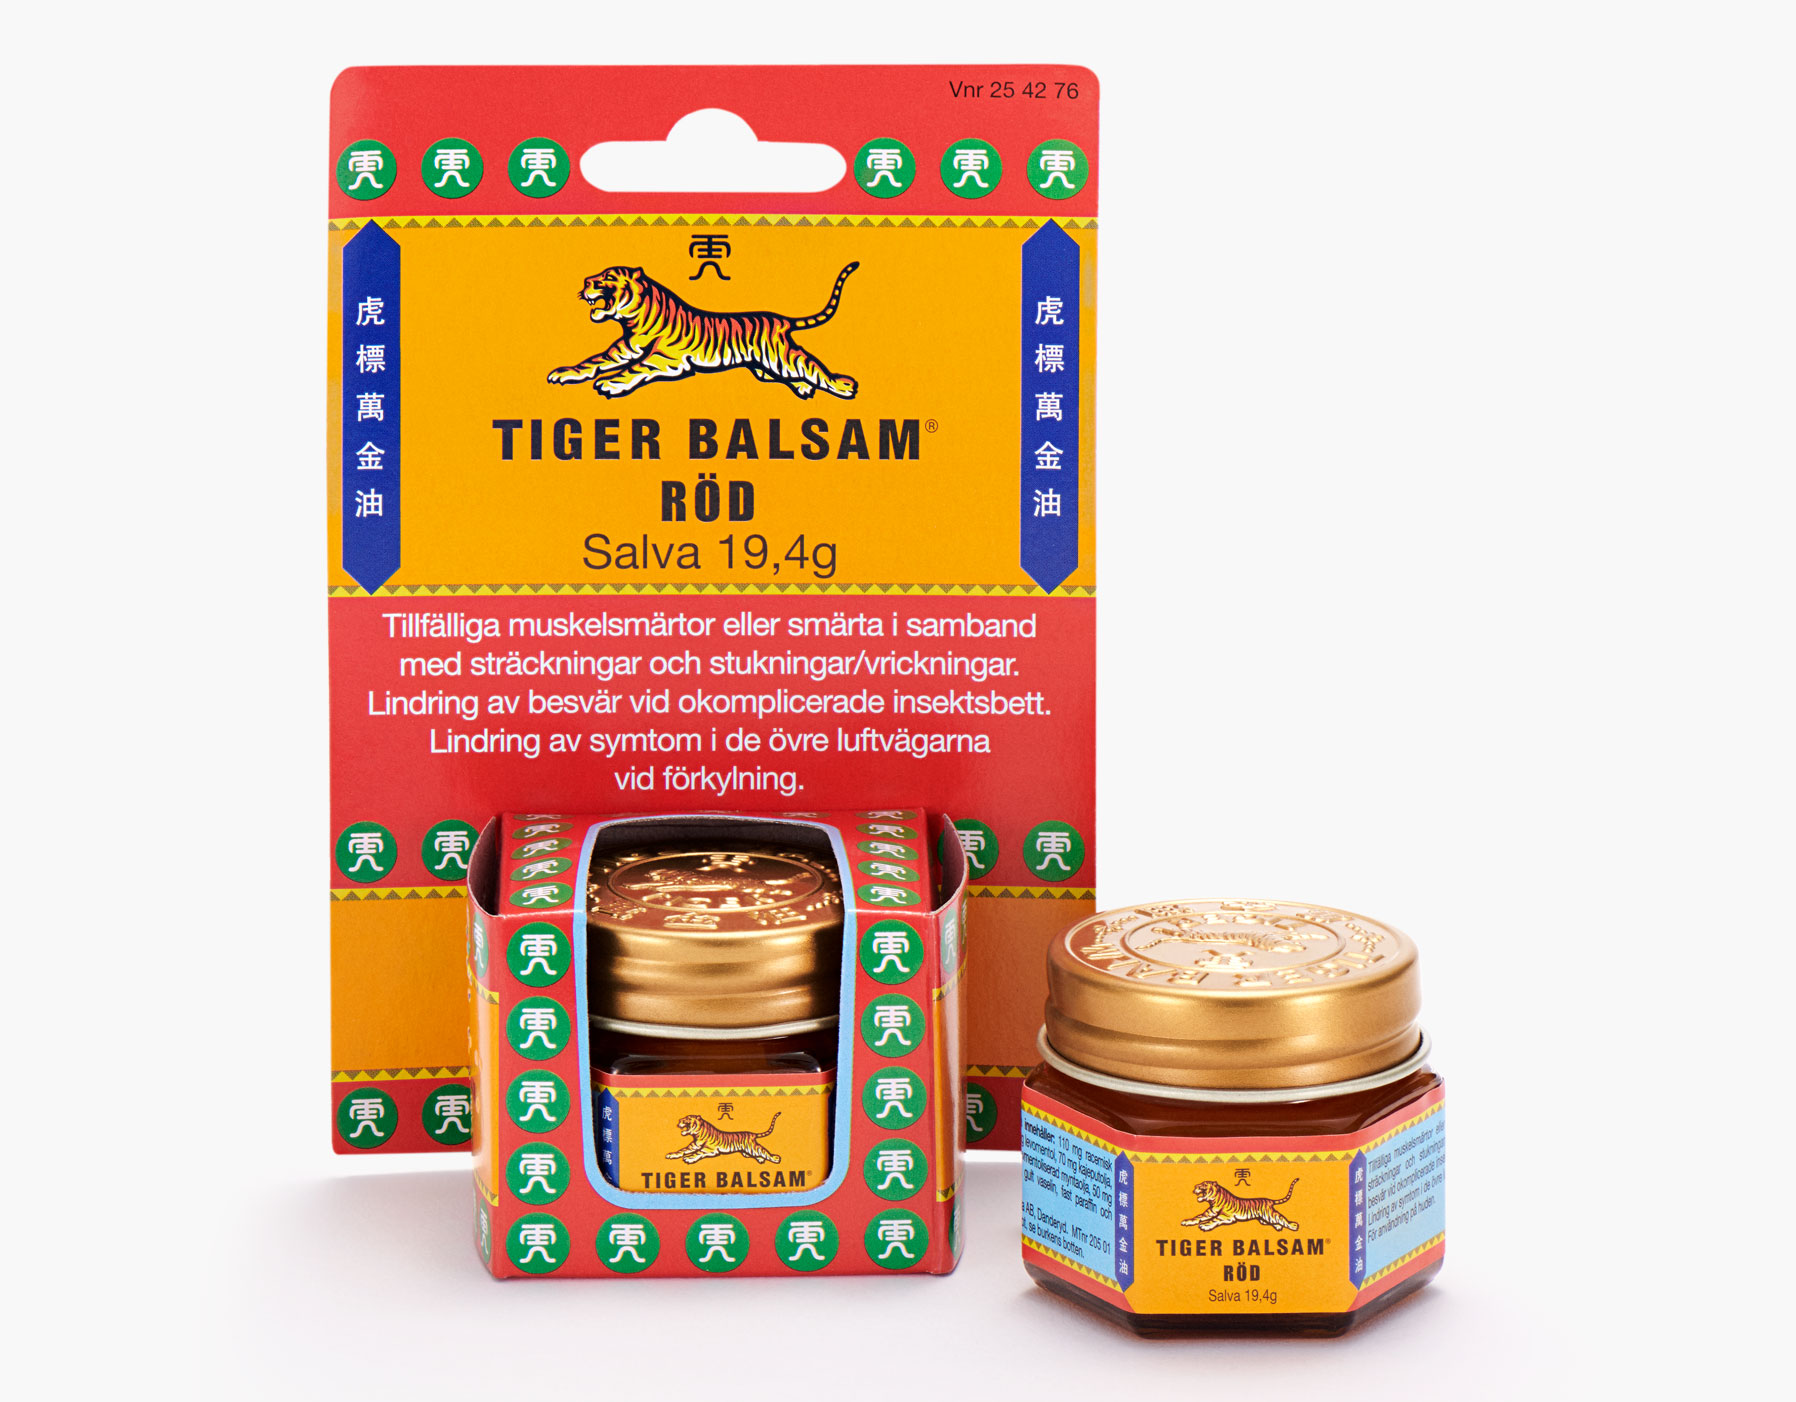 Tiger Balsam Produktbilder (psd)